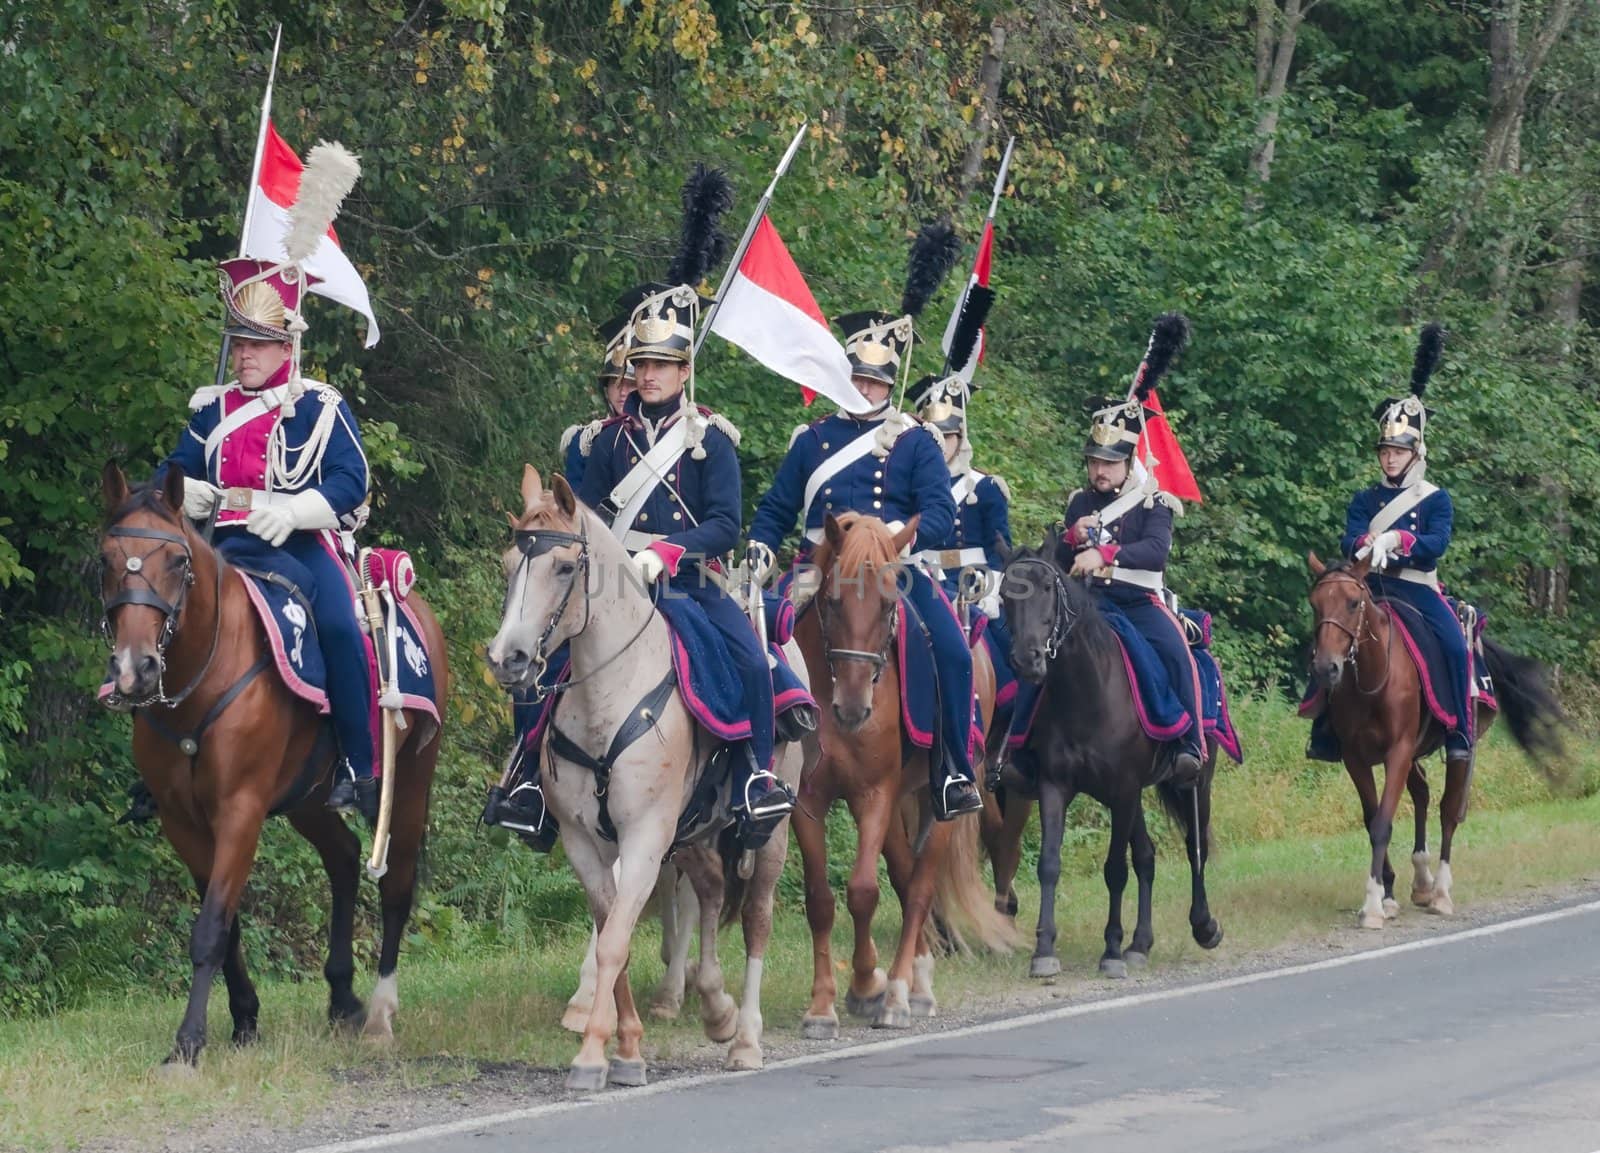 Napoleonic cavalry time - Polish lancers. Historical reconstruction of the Battle of Borodino on holiday.